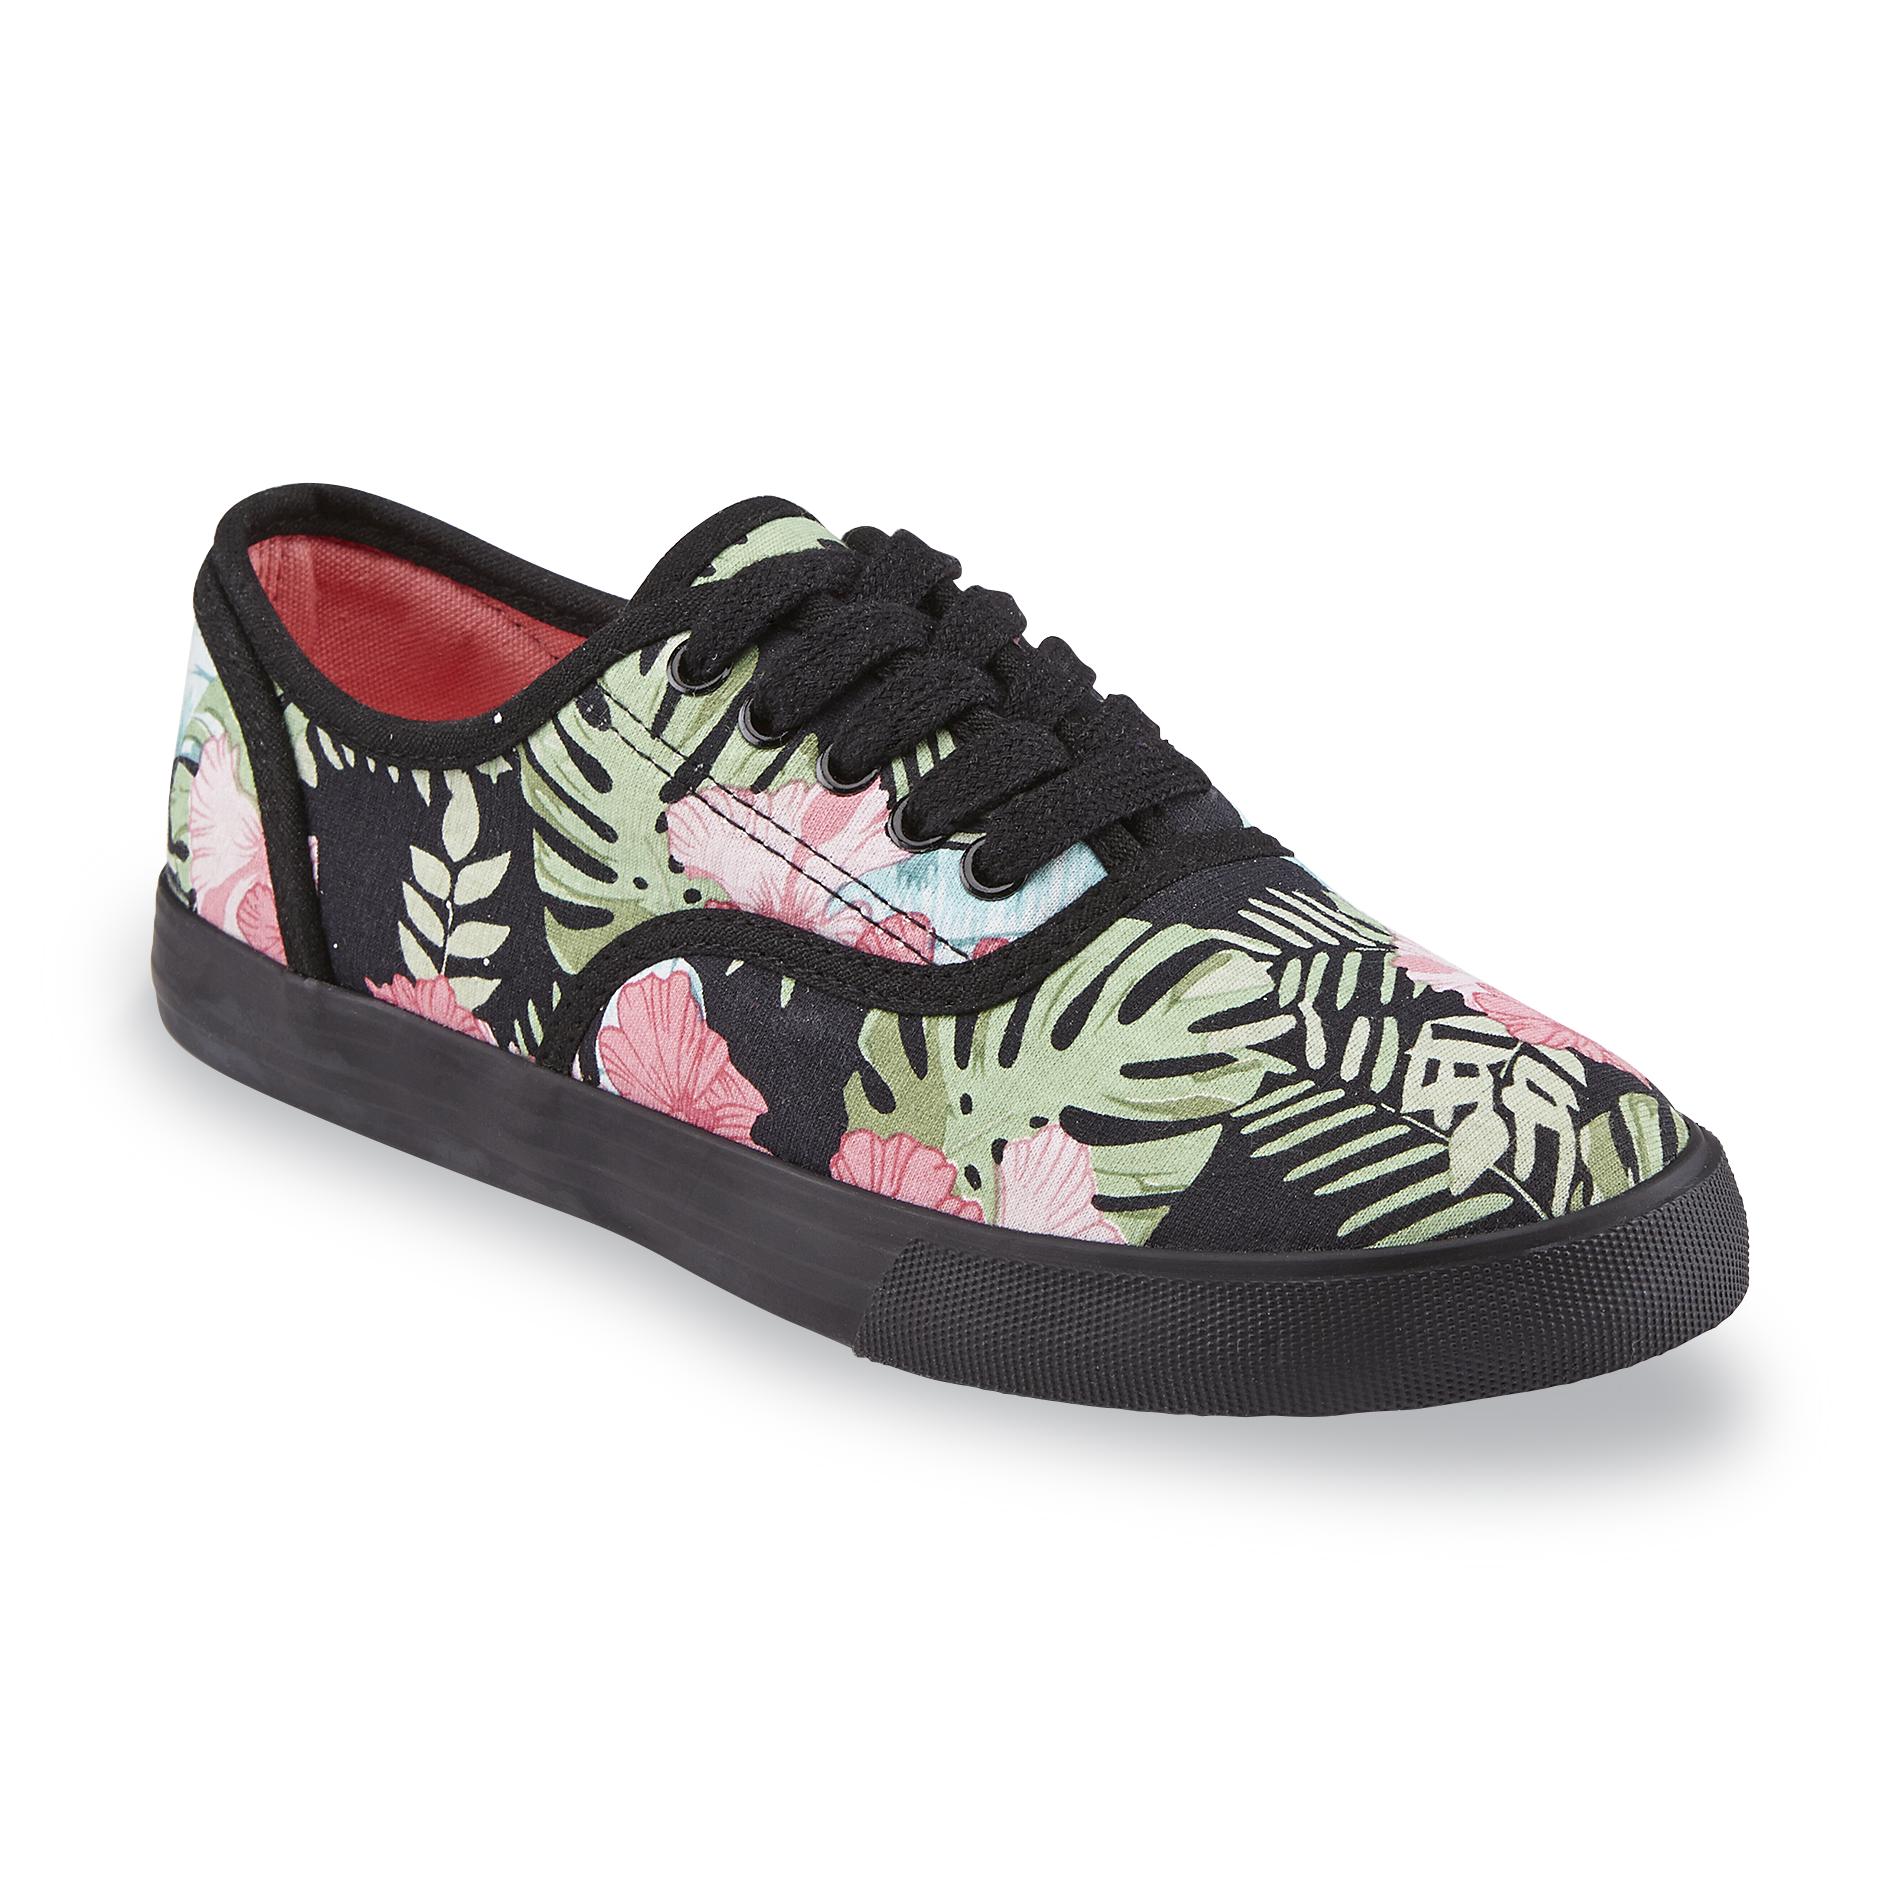 Joe Boxer Women's Sonoma Multicolor/Floral Print Casual Shoe